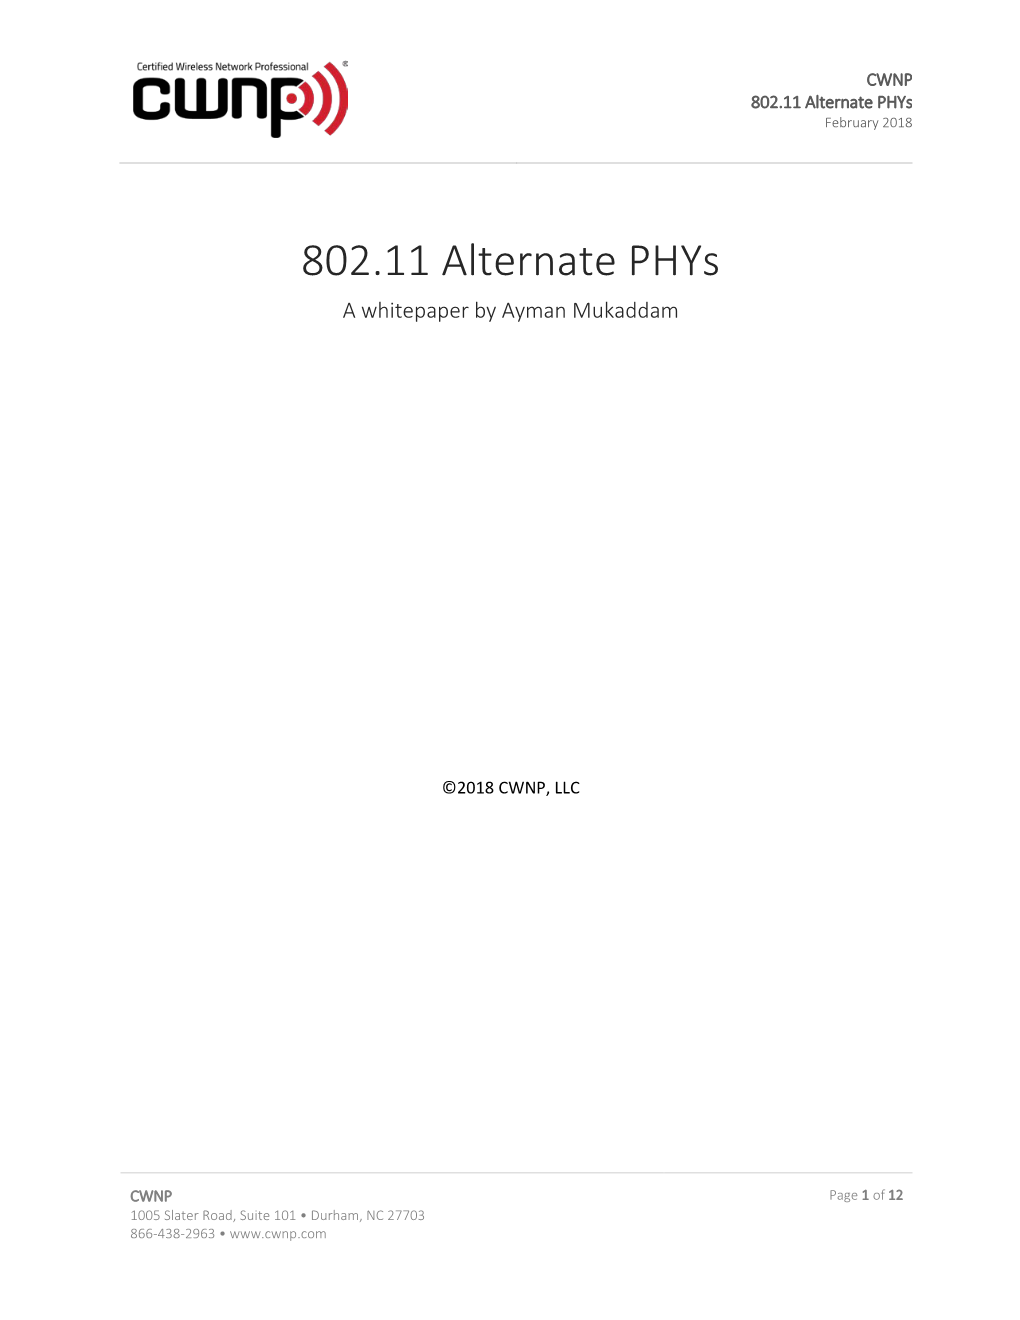 802.11 Alternate Phys February 2018